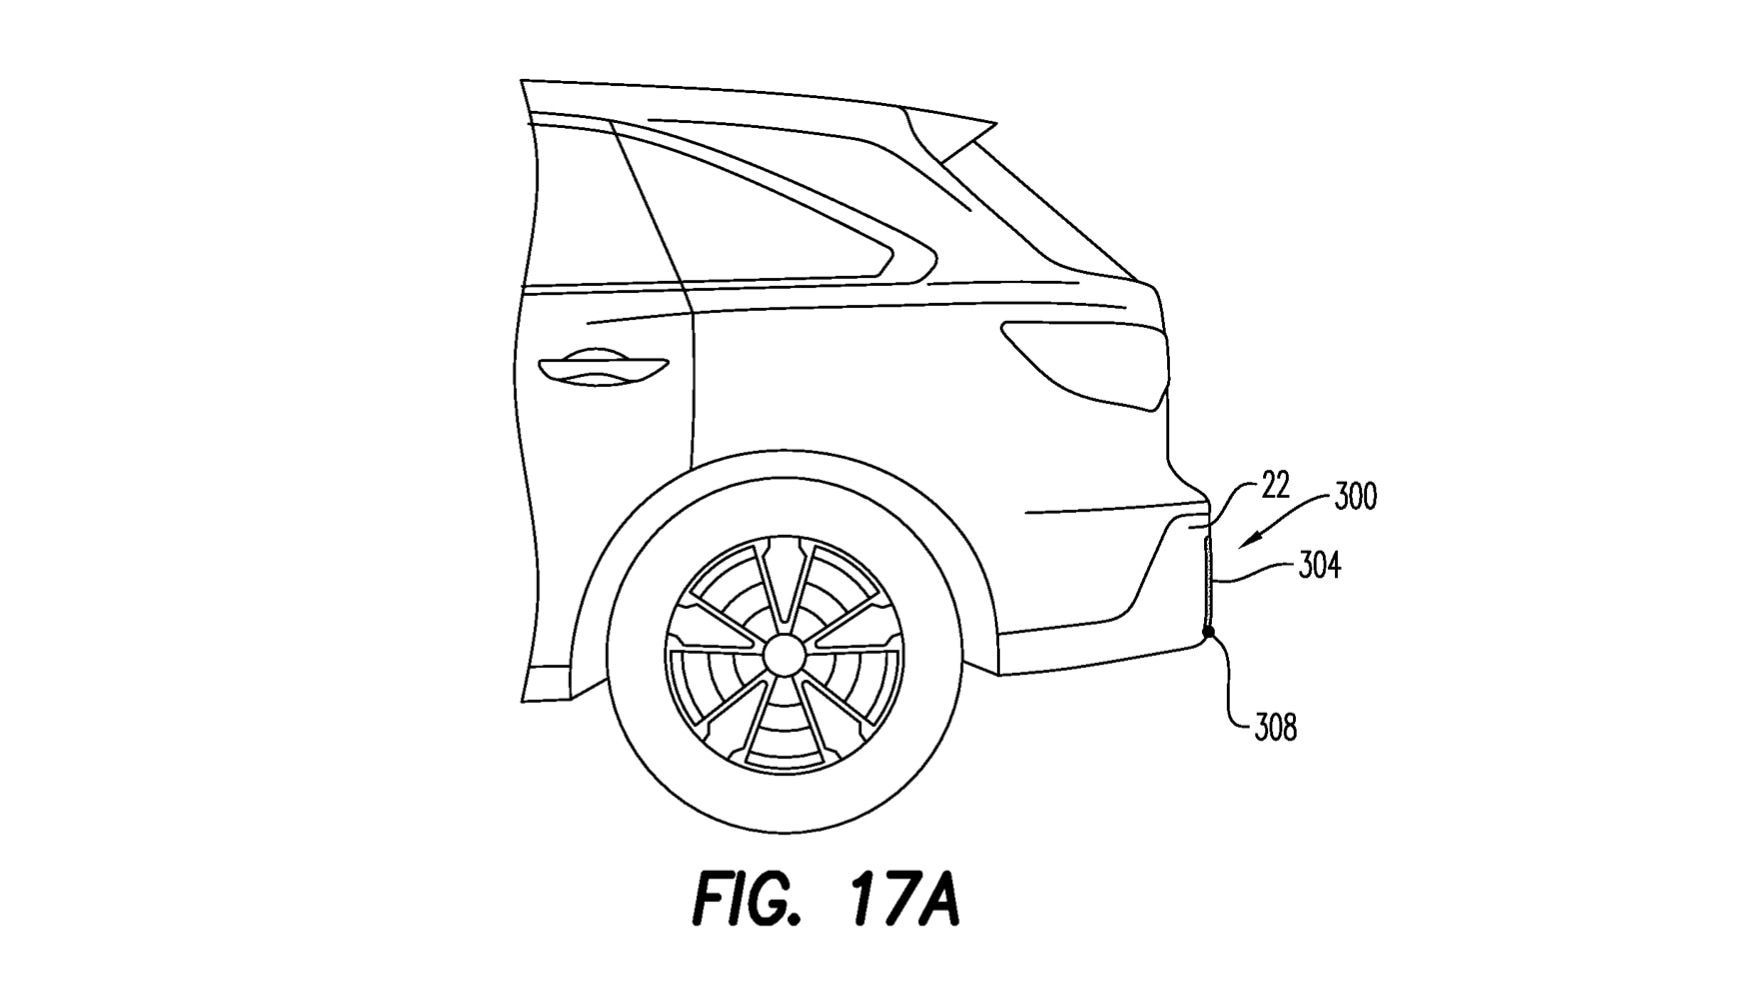 Honda active rear diffuser patent image